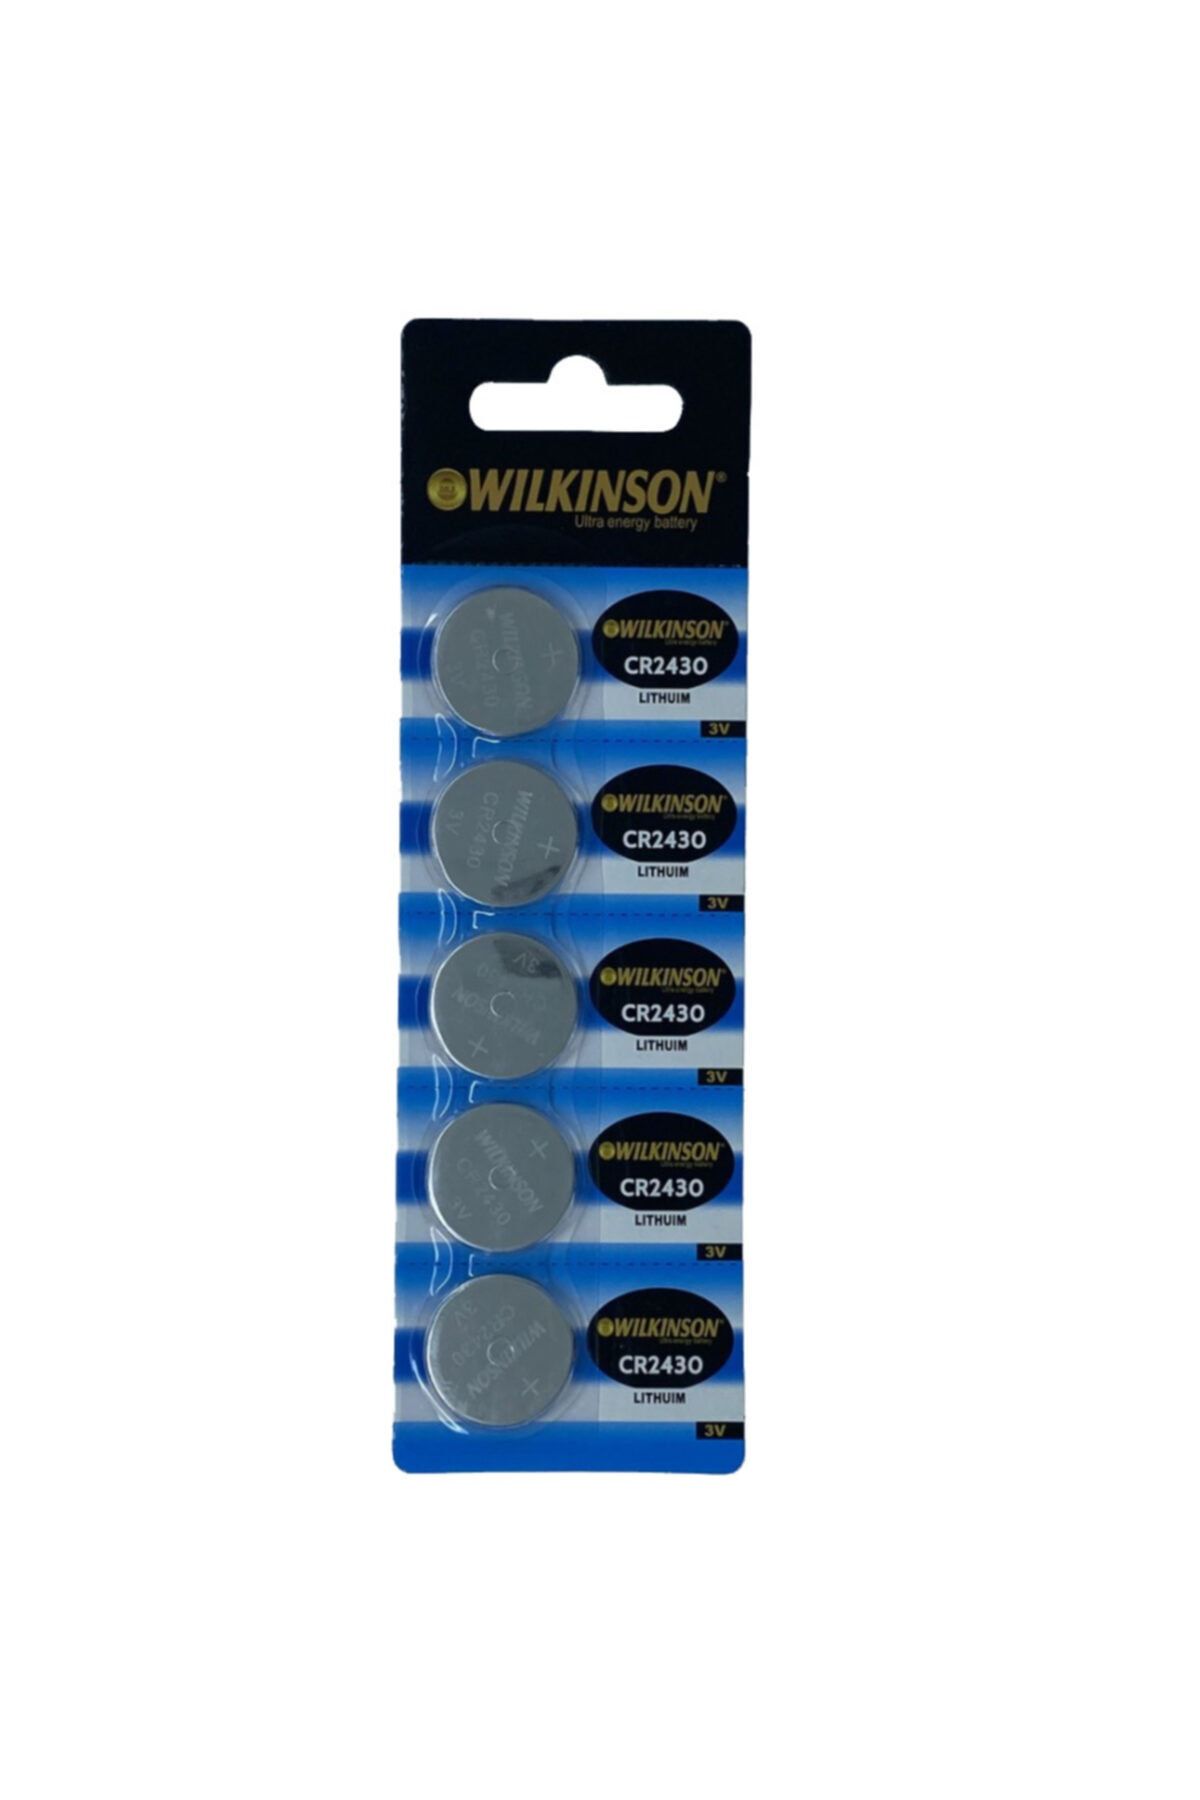 Hisar Wılkınson 2430 3v Lityum Düğme Pil 5'li Paket